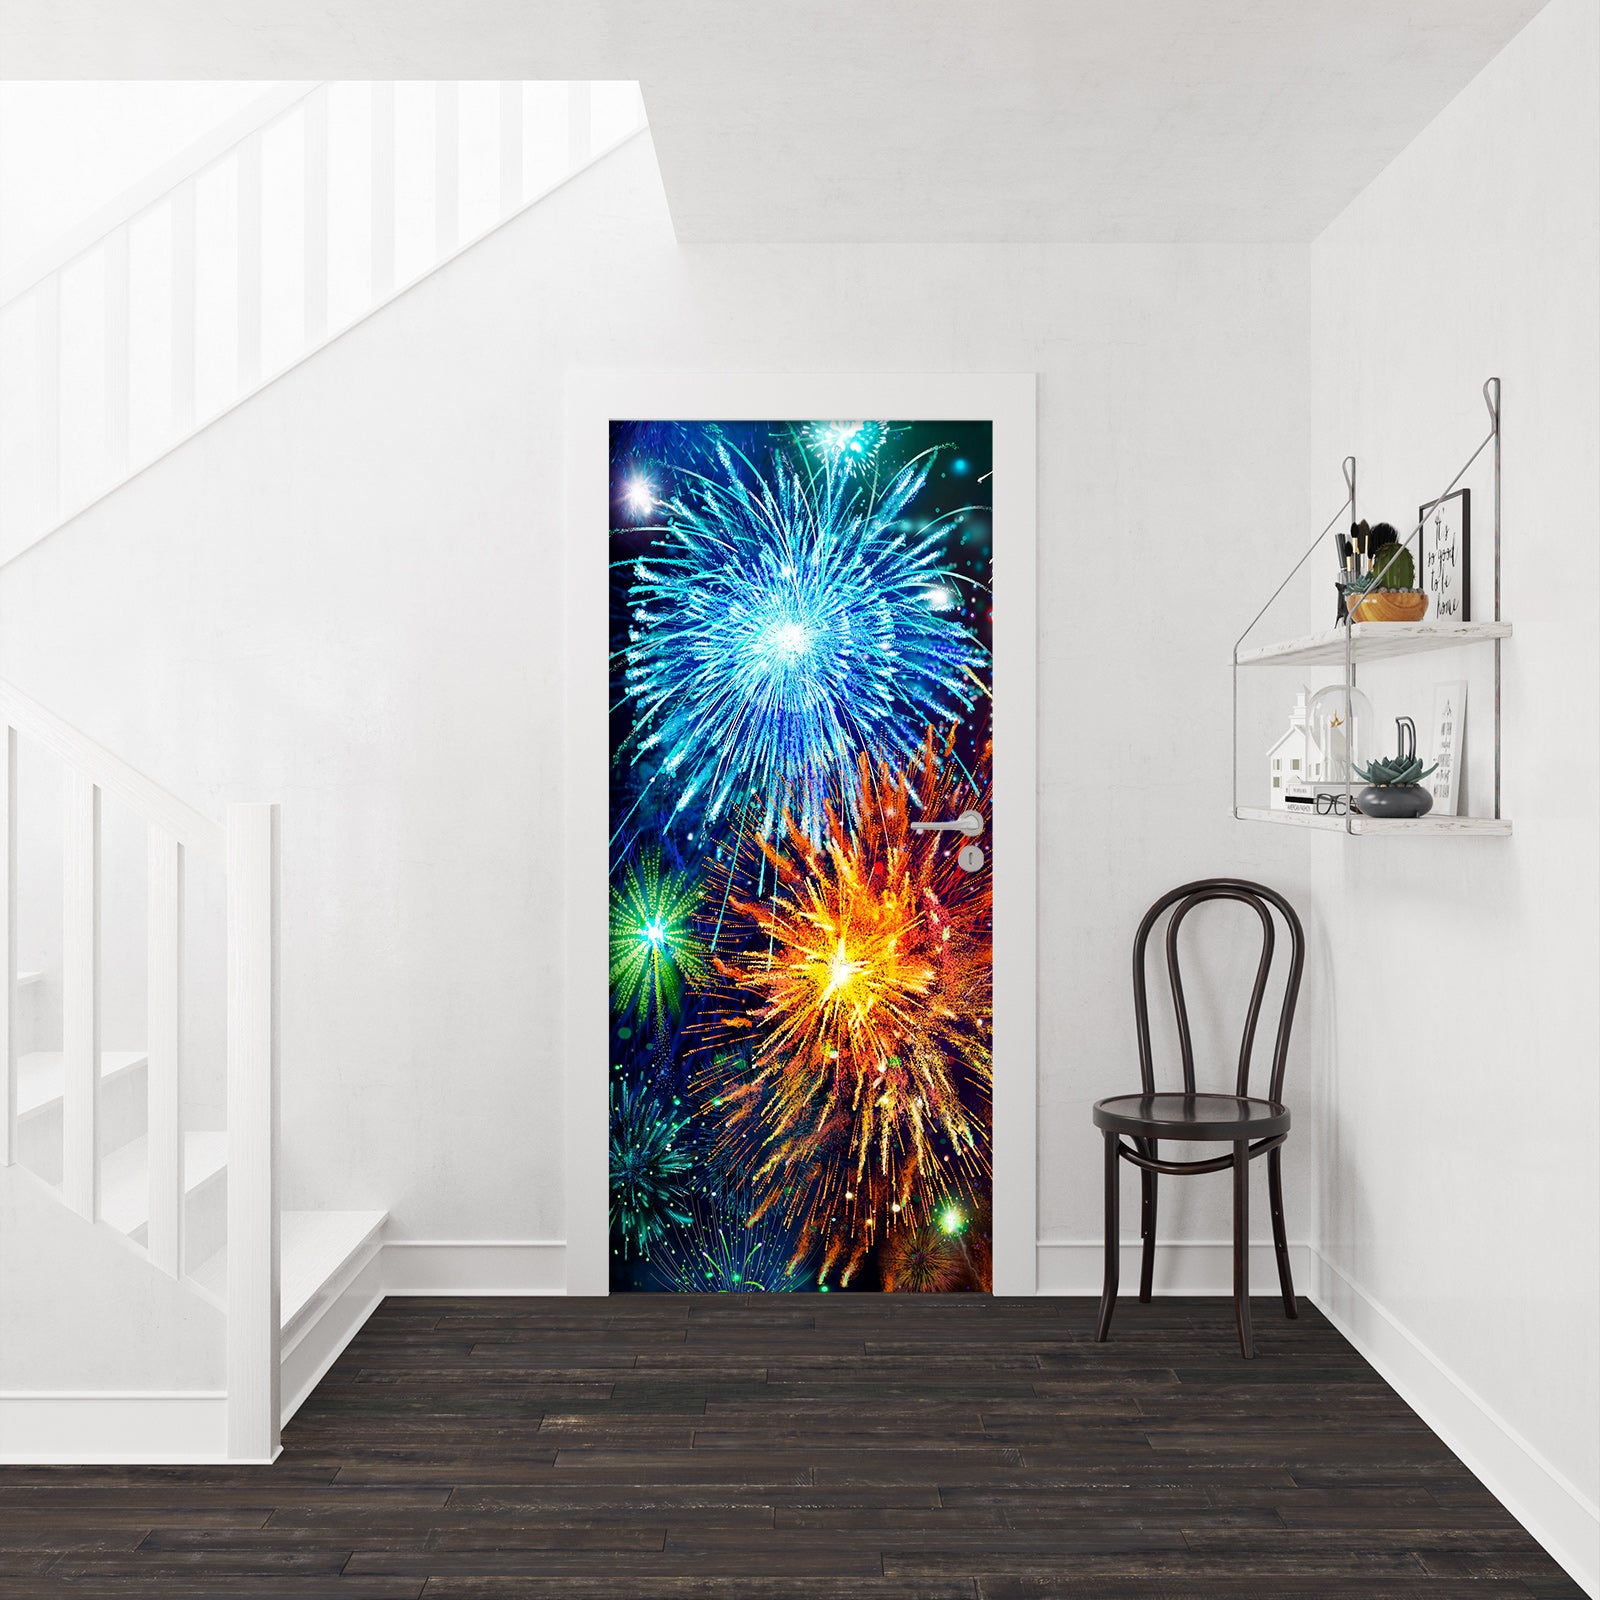 3D Blue Fireworks 153 Door Mural